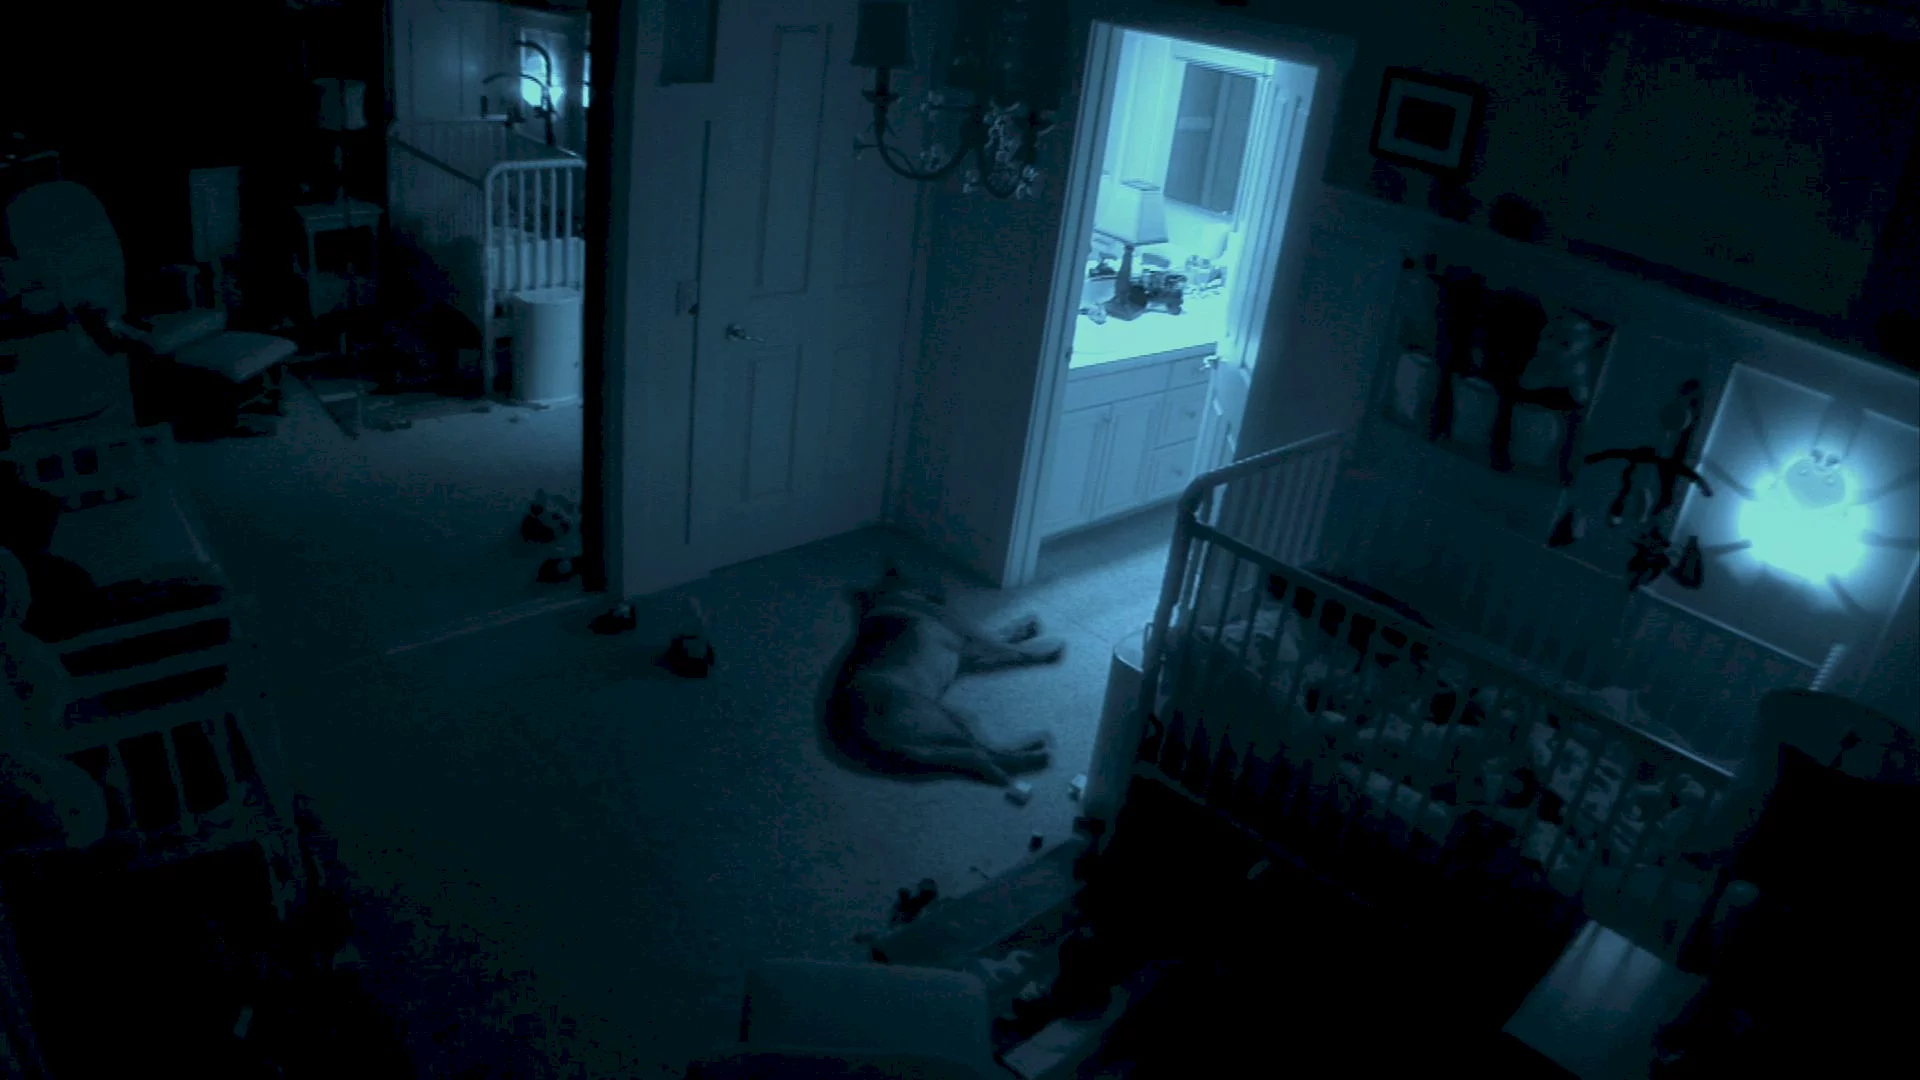 Photo du film : Paranormal Activity 2 